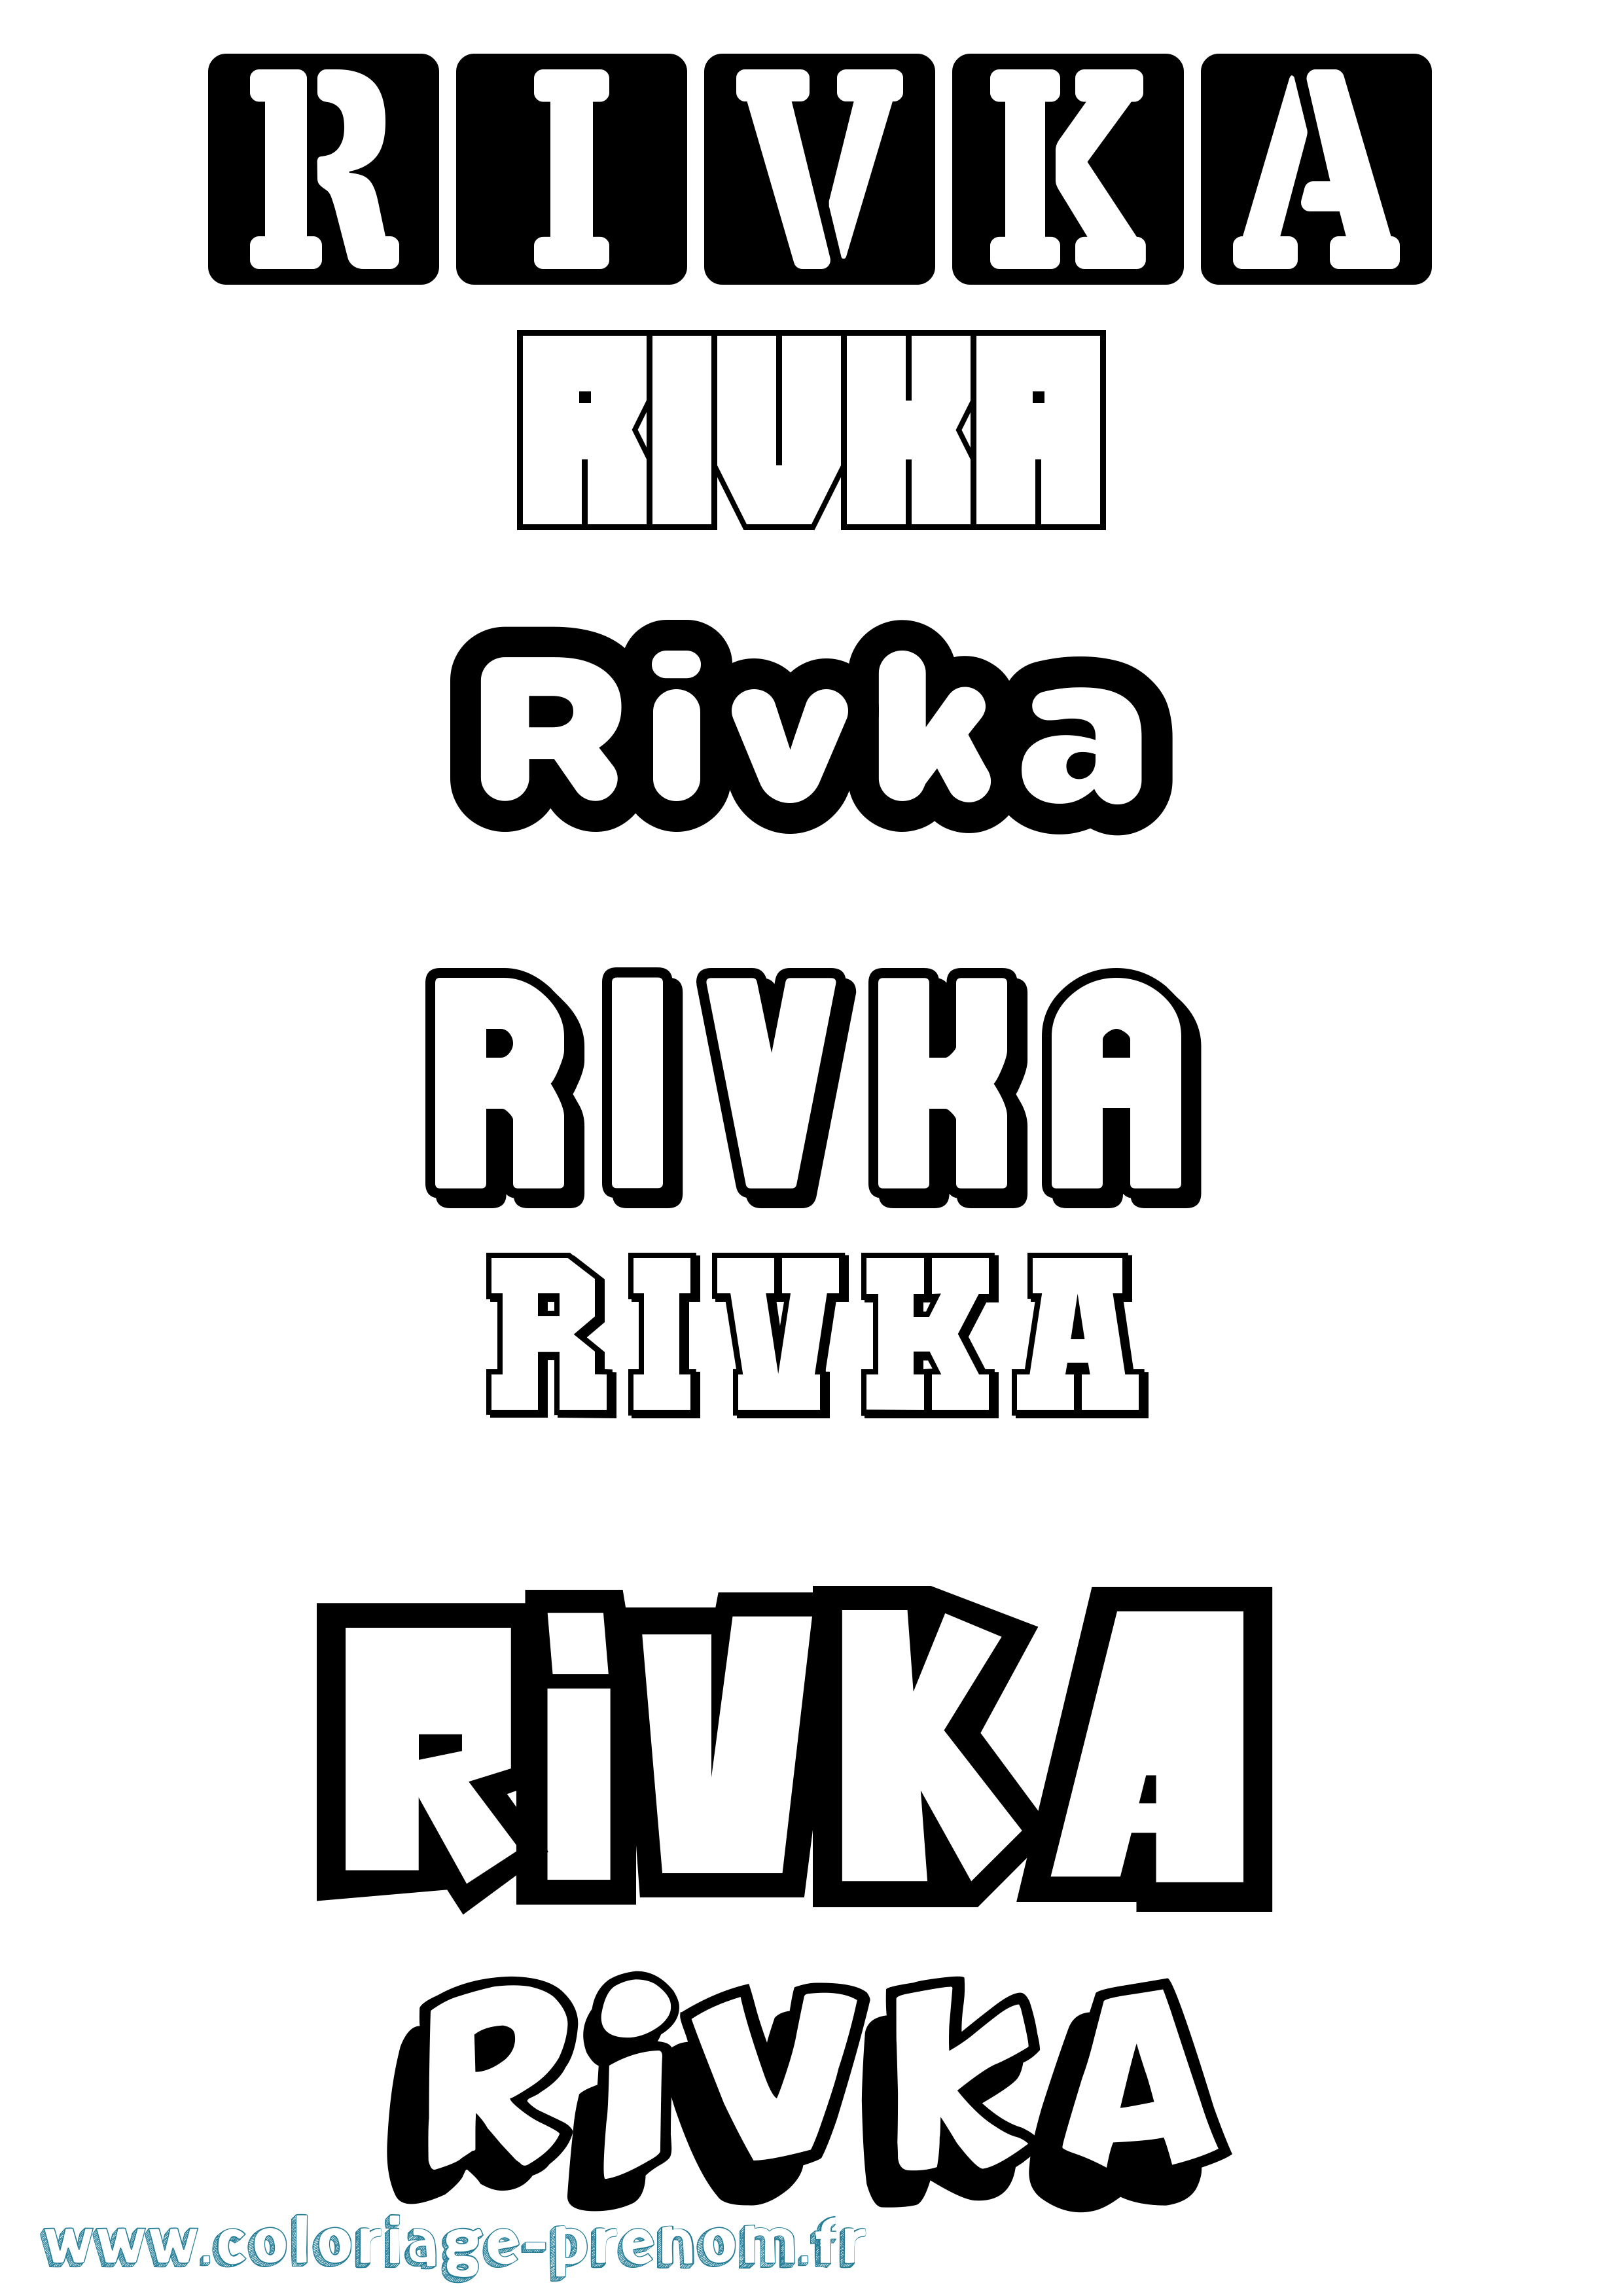 Coloriage prénom Rivka Simple